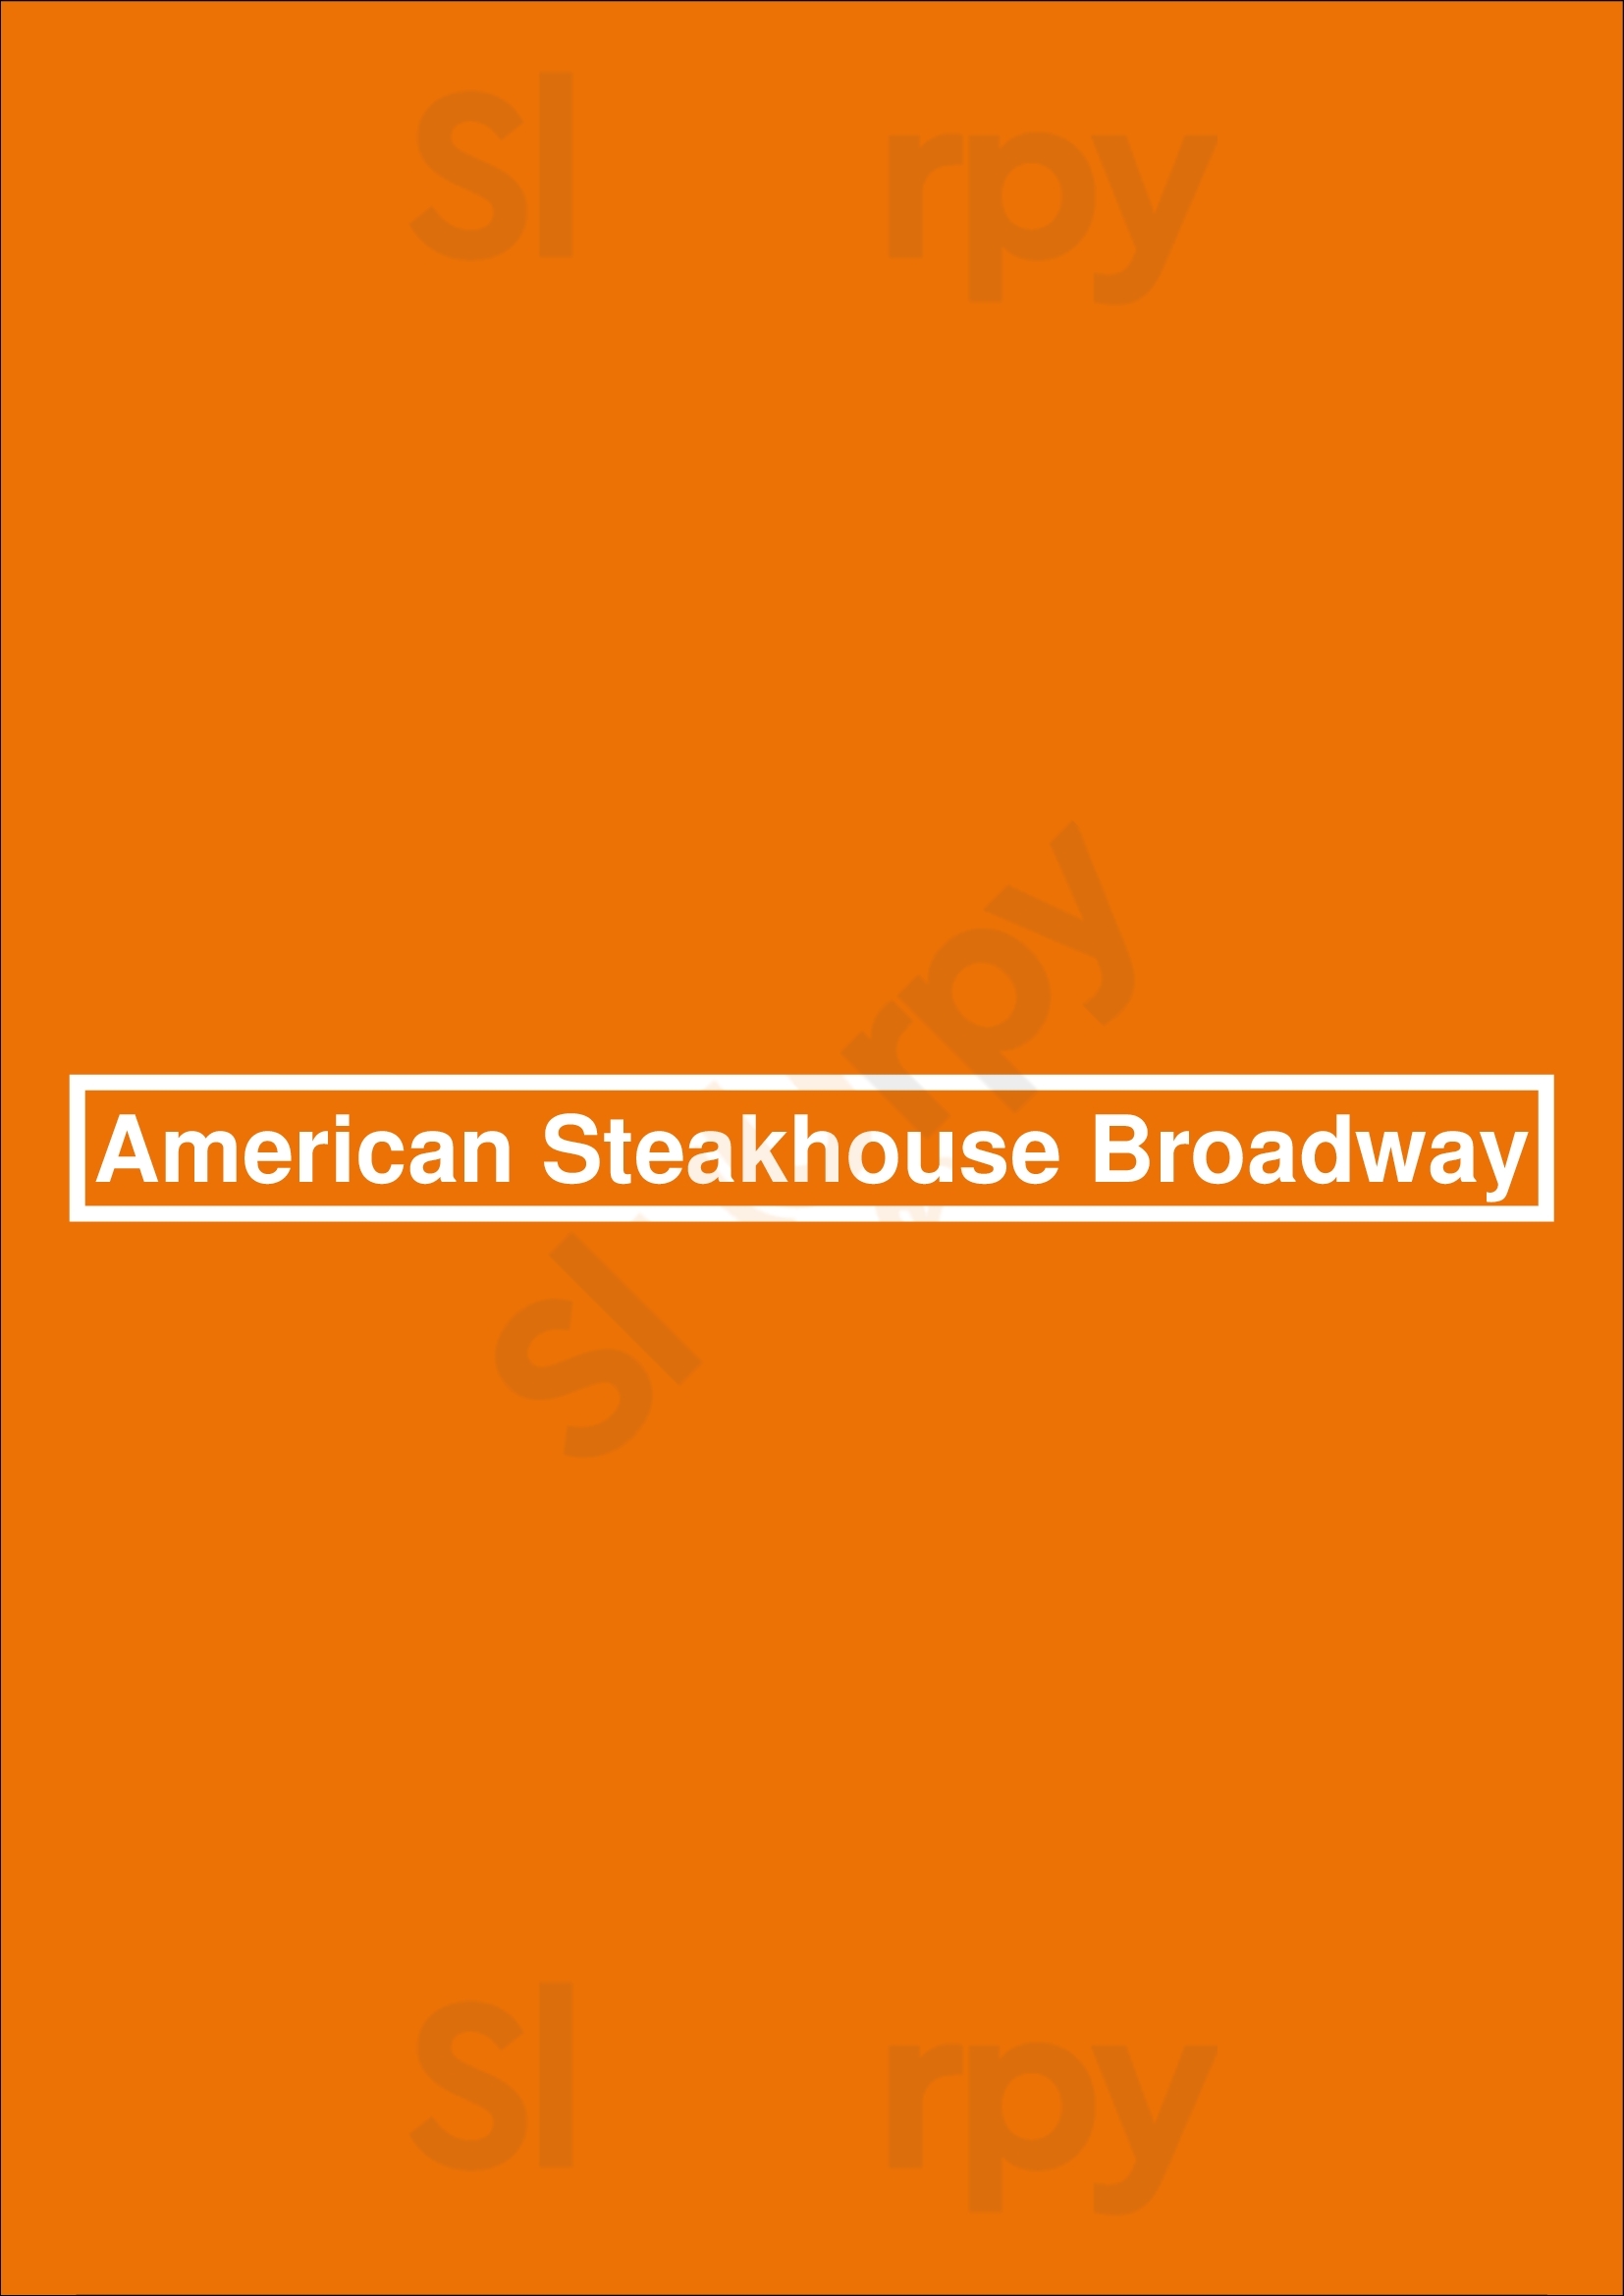 American Steakhouse Broadway Utrecht Menu - 1